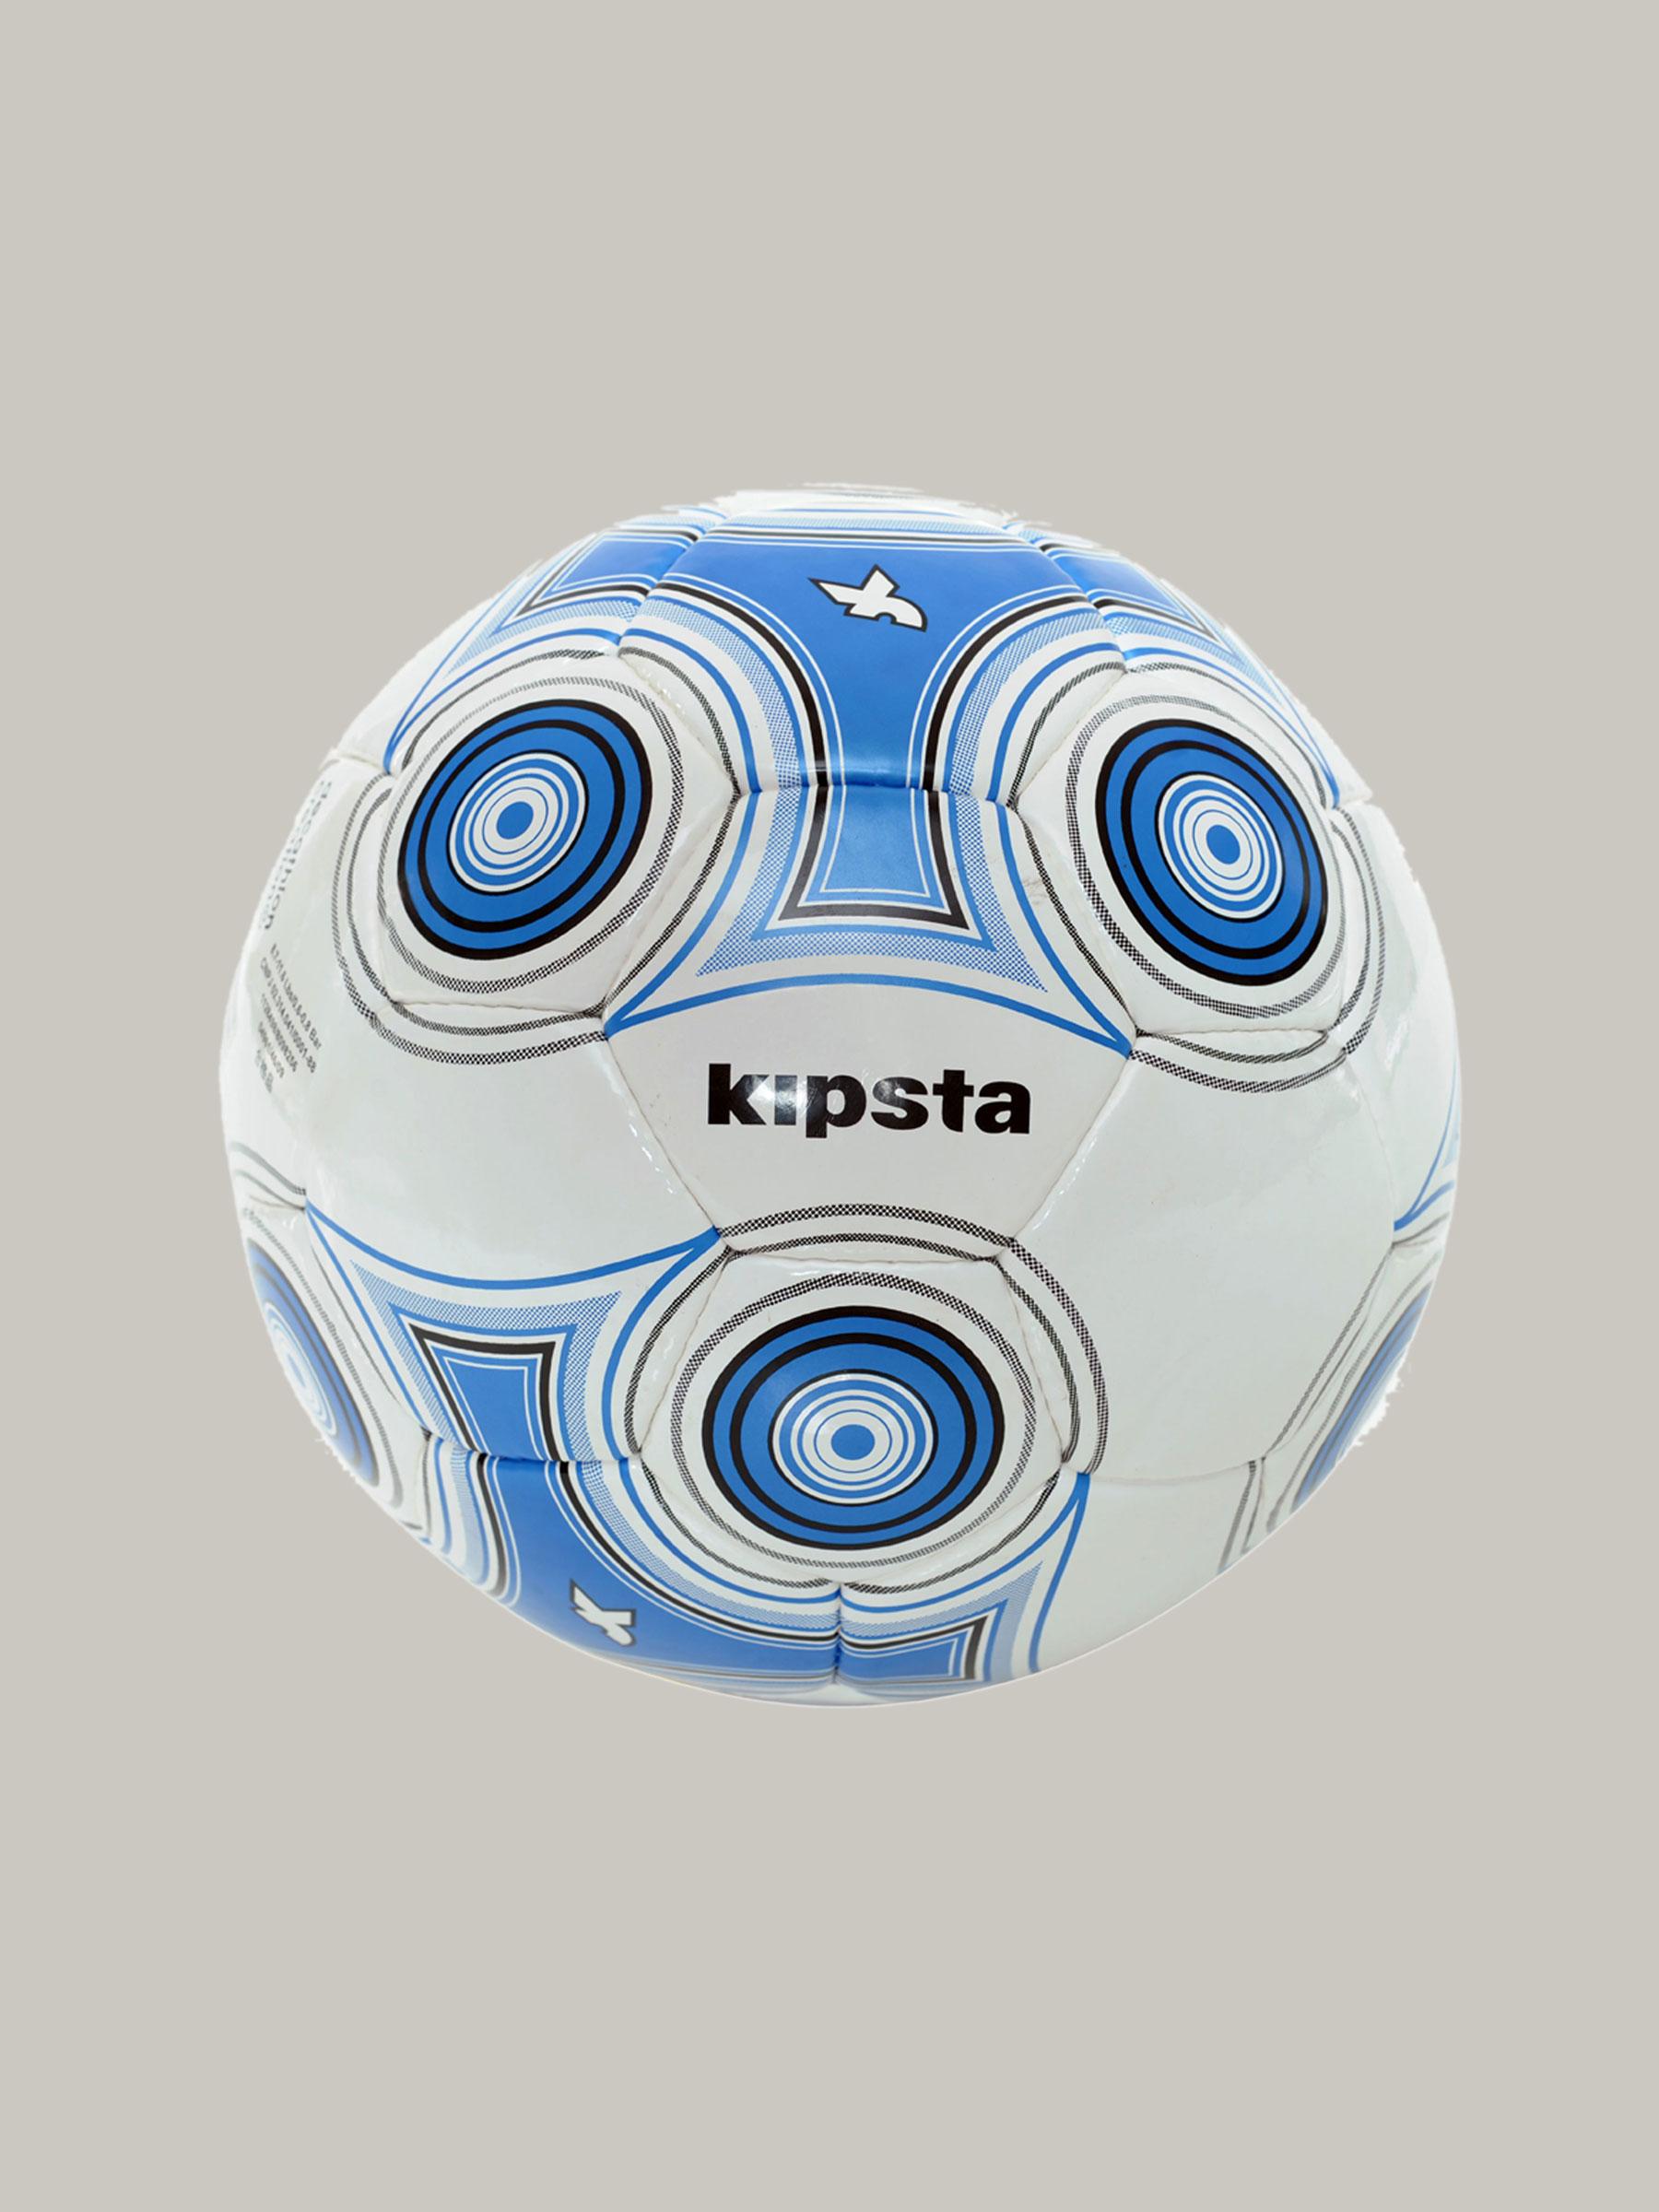 Kipsta F300 Football Size 5 Football